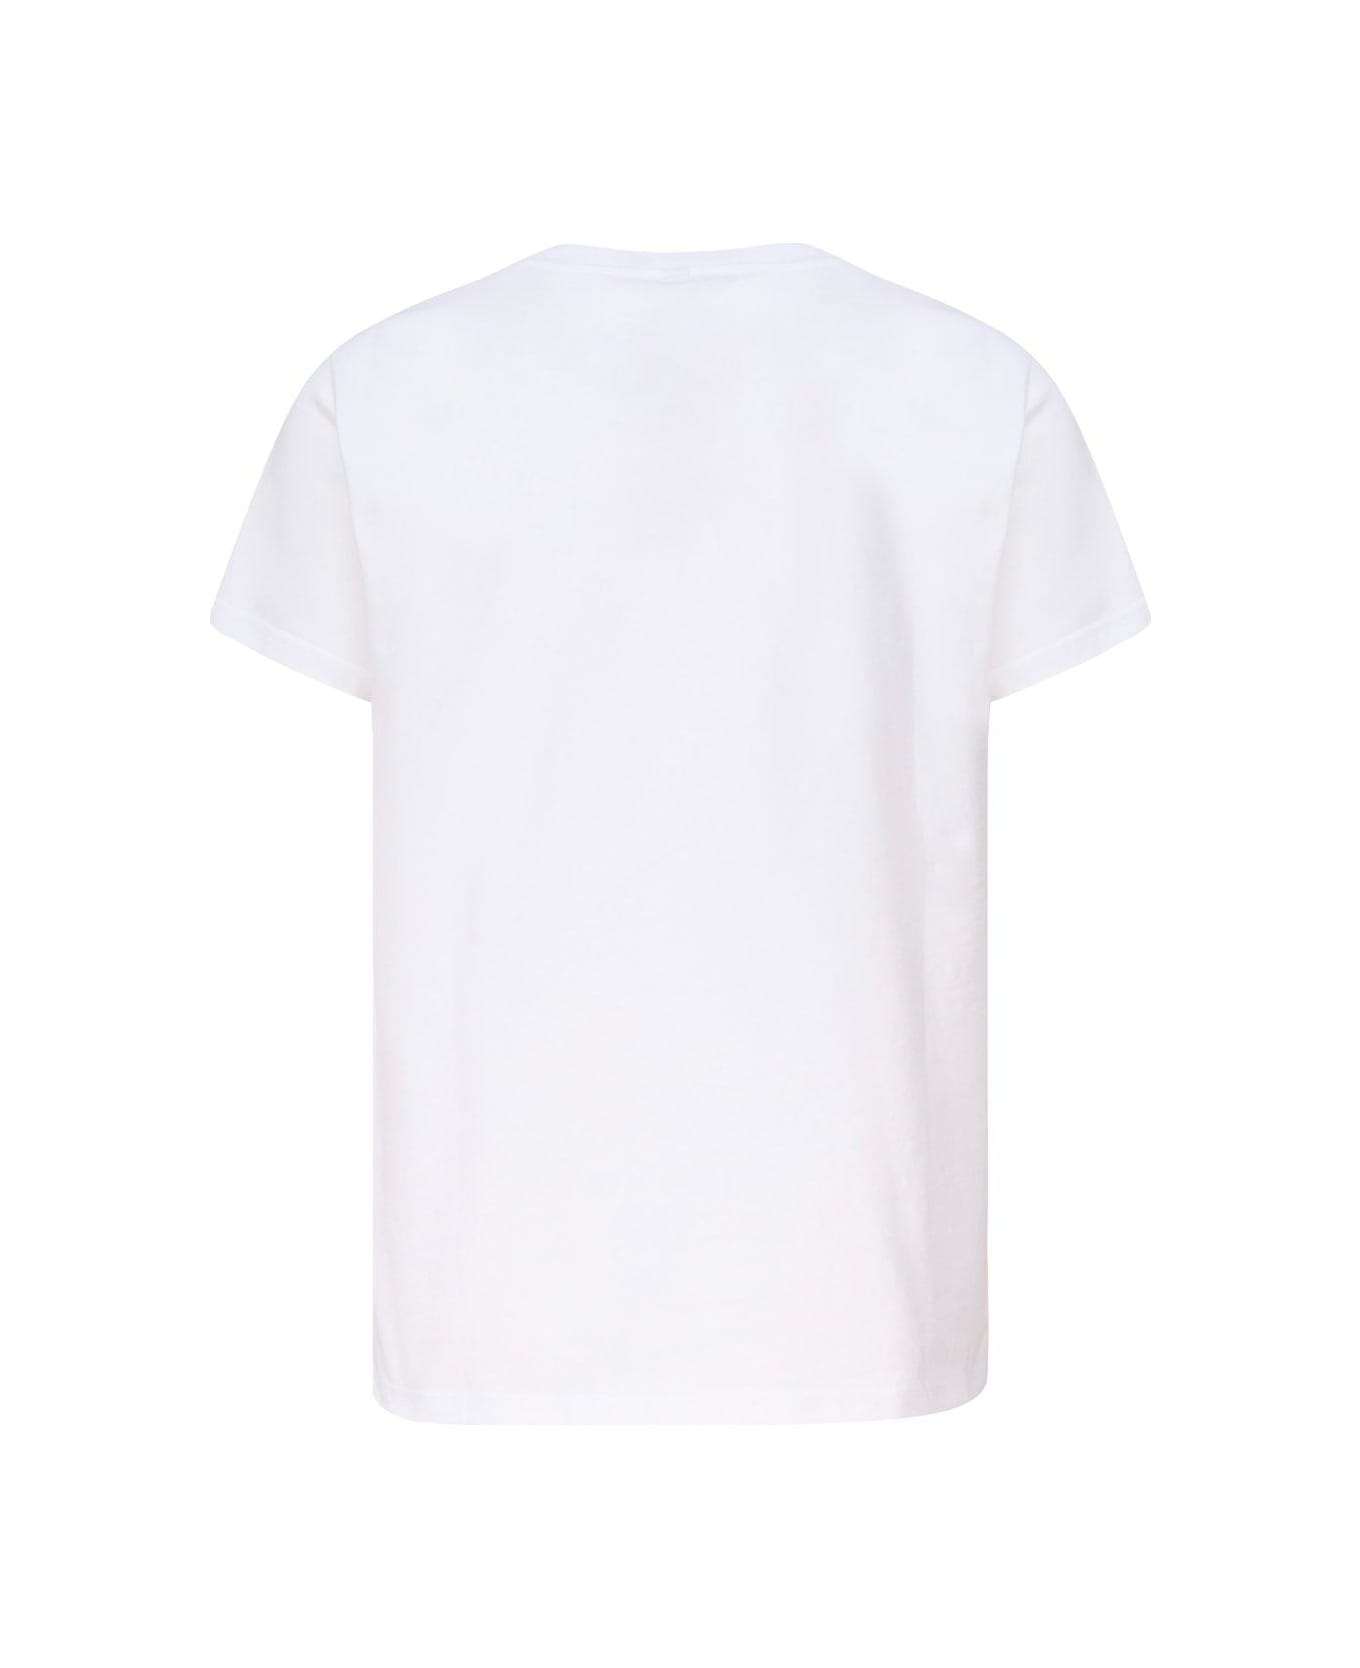 Moschino Logo Printed Crewneck T-shirt - White シャツ